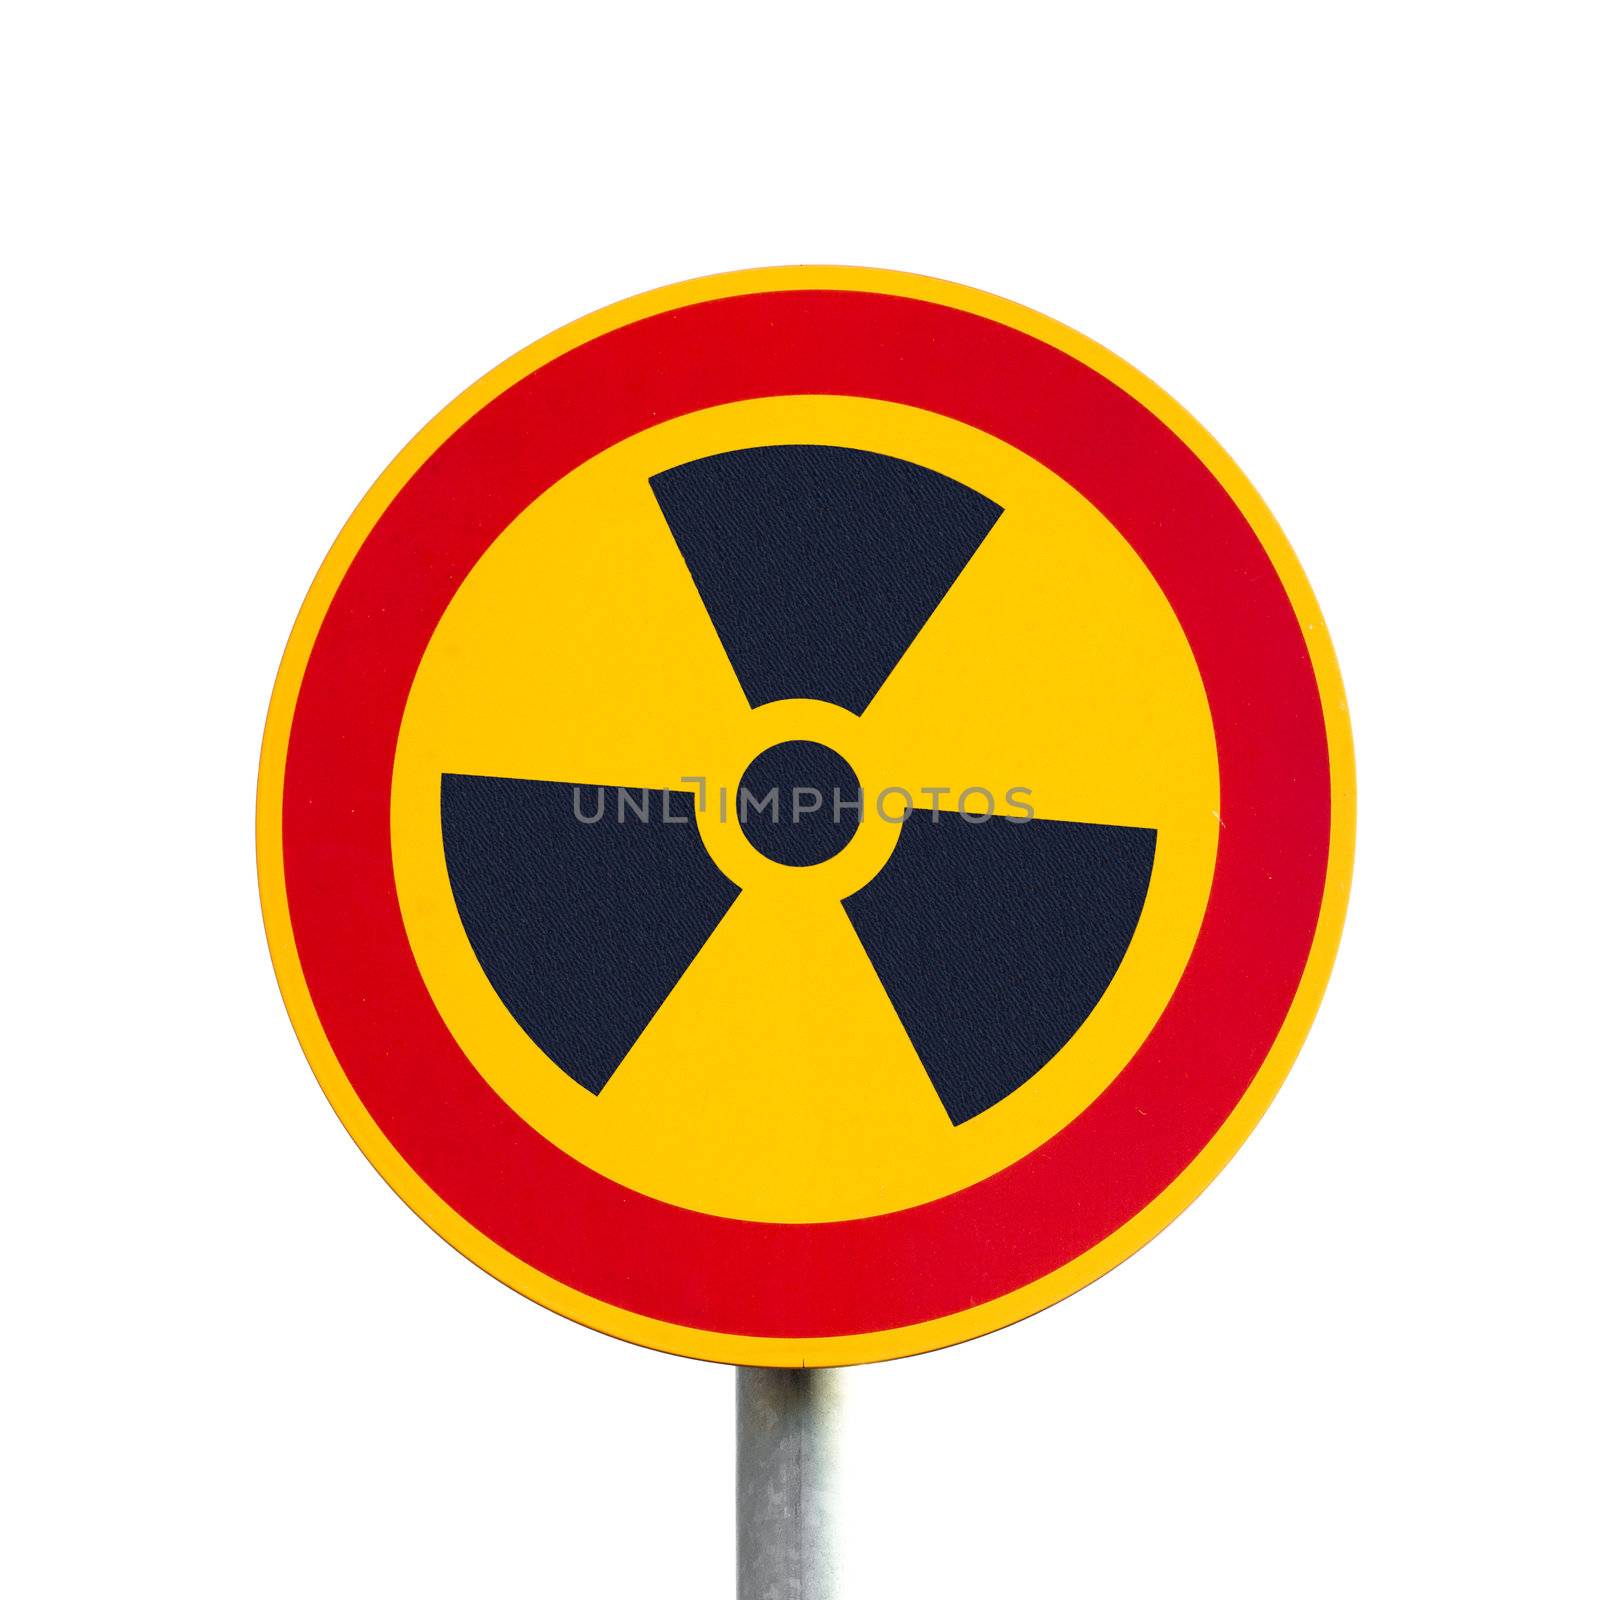 Symbolic radioactivity sign on metal post isolated on white background.